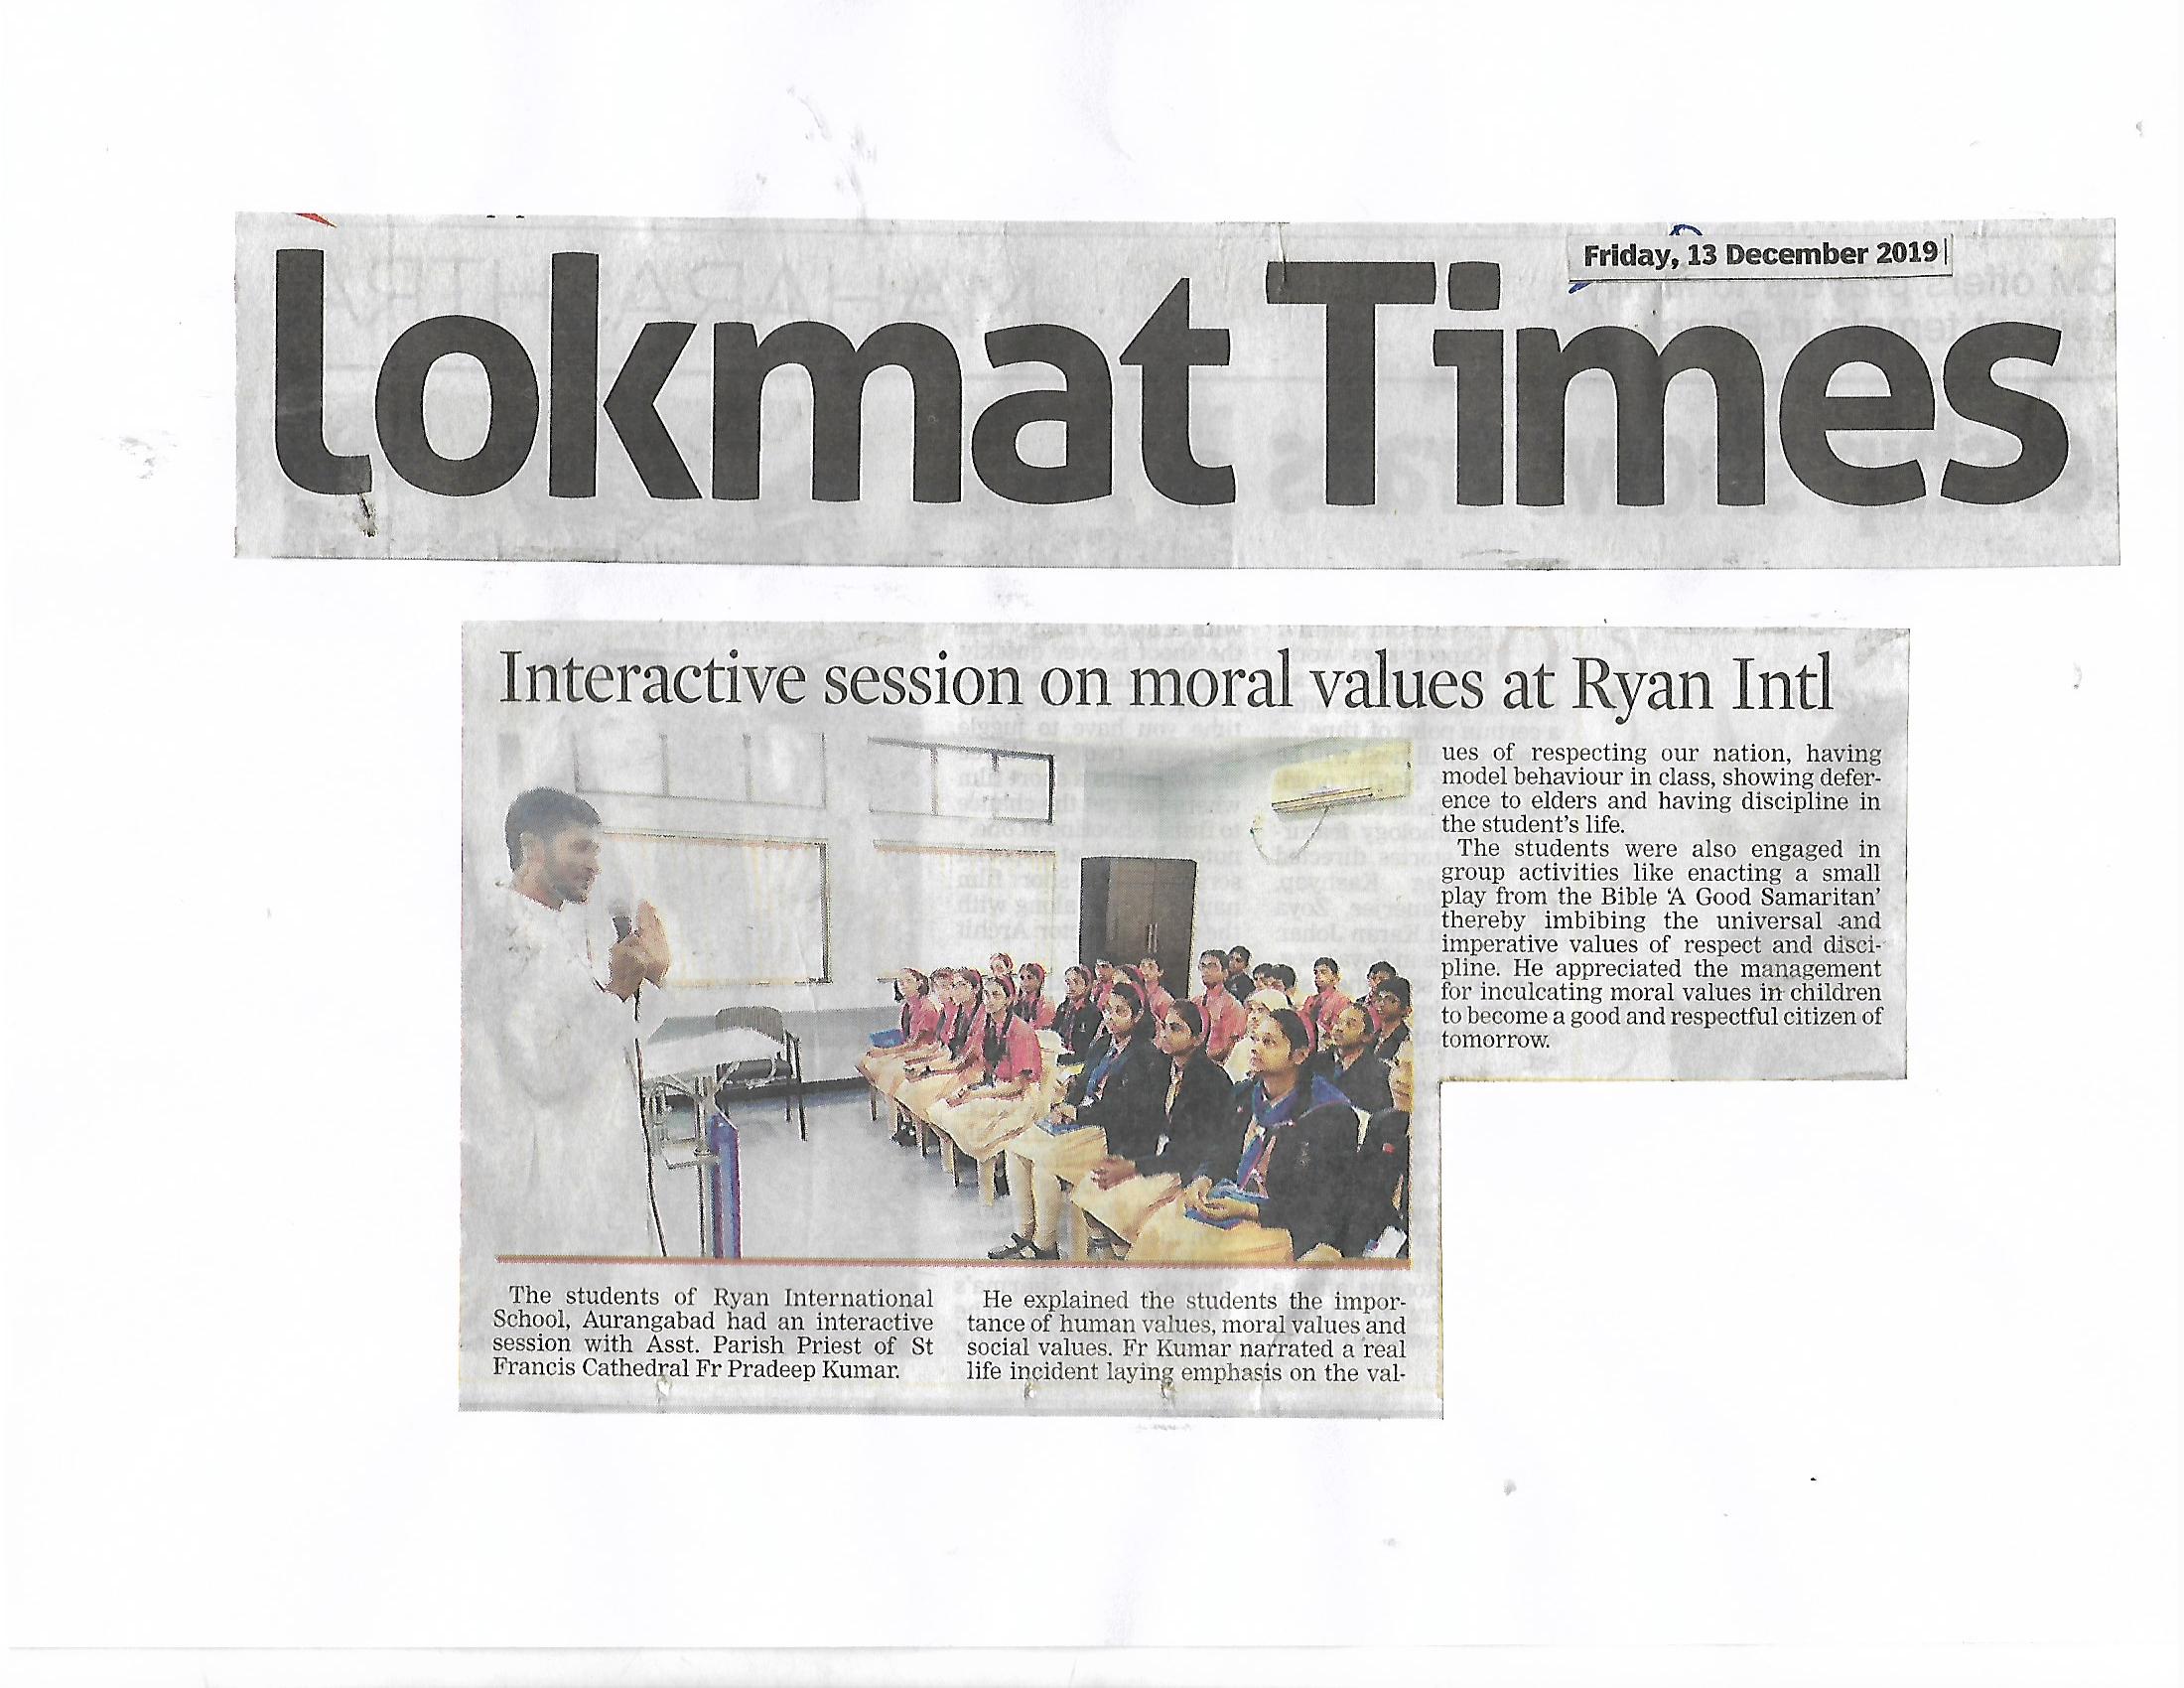 Interactive Session with Pastor' - Ryan International School, Aurangabad